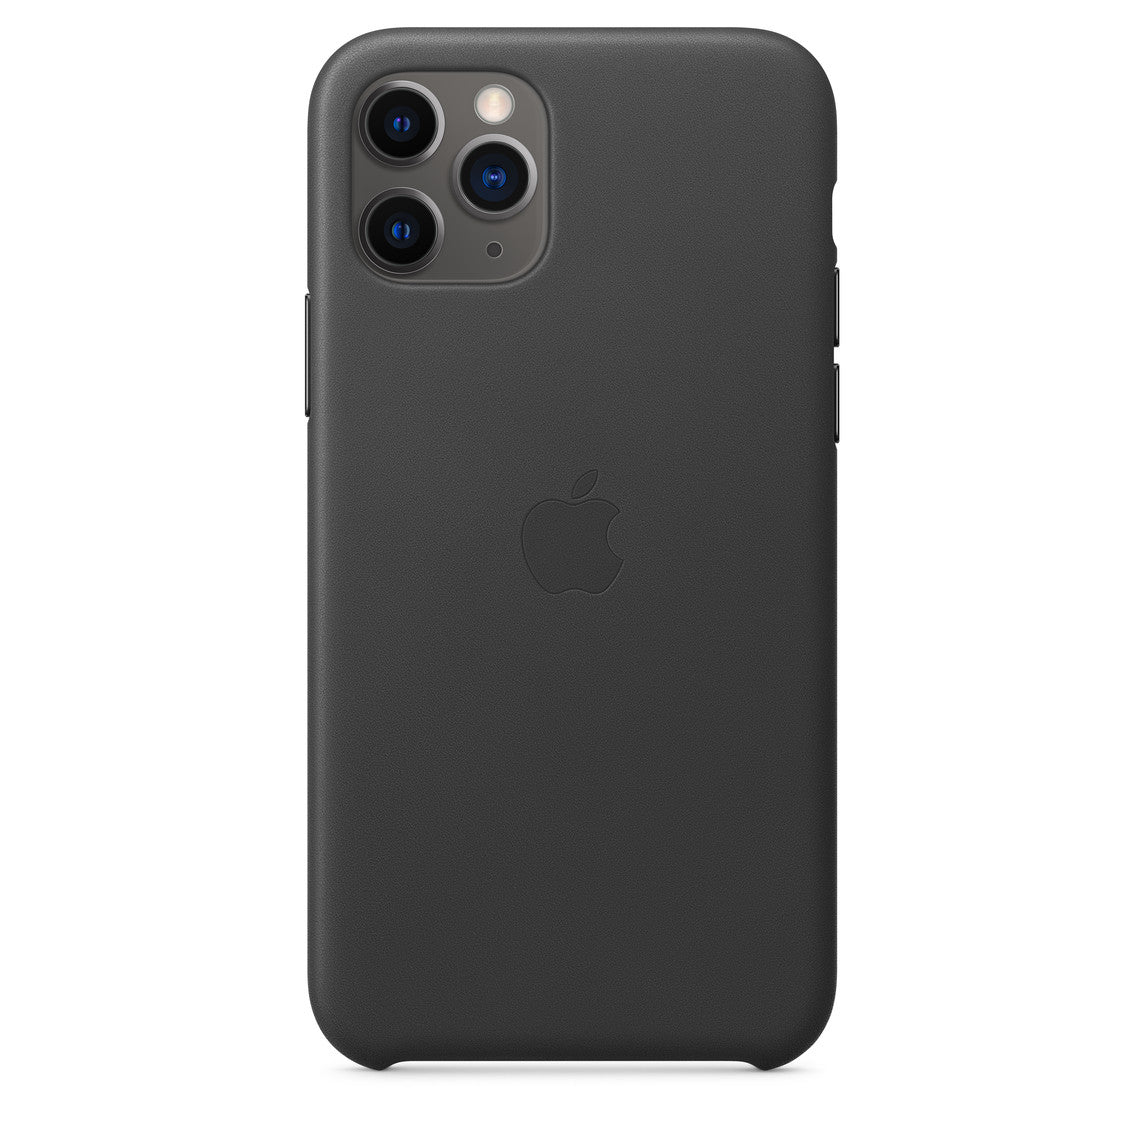 Apple iPhone 11 Pro Leather Case - Black Black New - Sealed